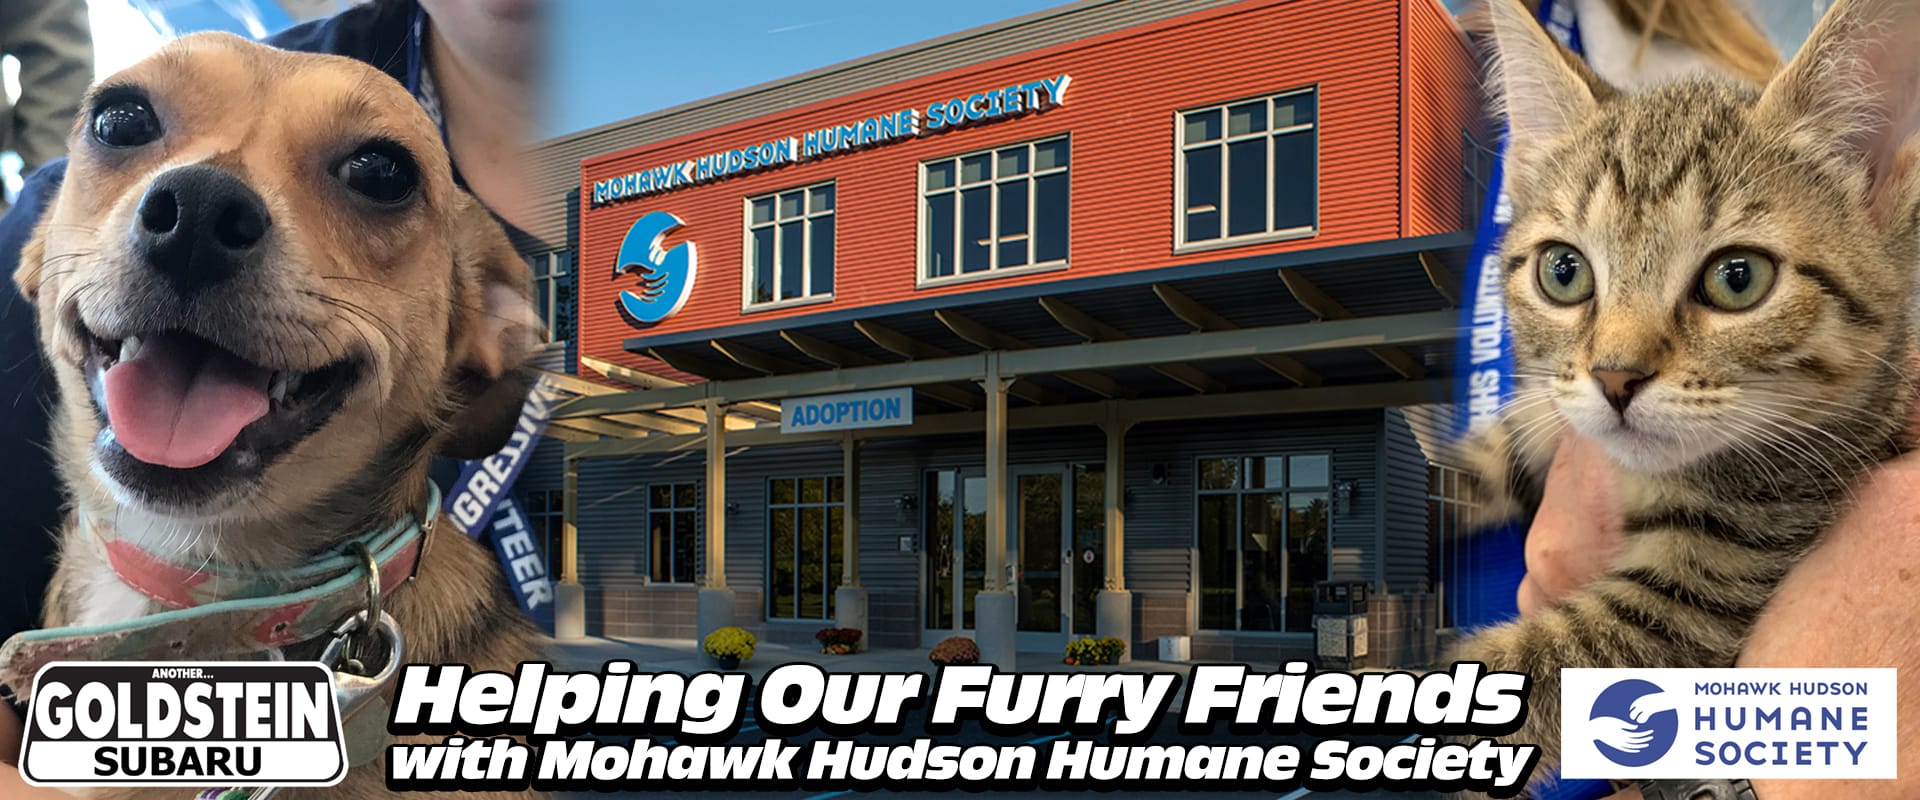 Goldstein Subaru of Albany, NY and Mohawk Hudson Humane Society Donations information